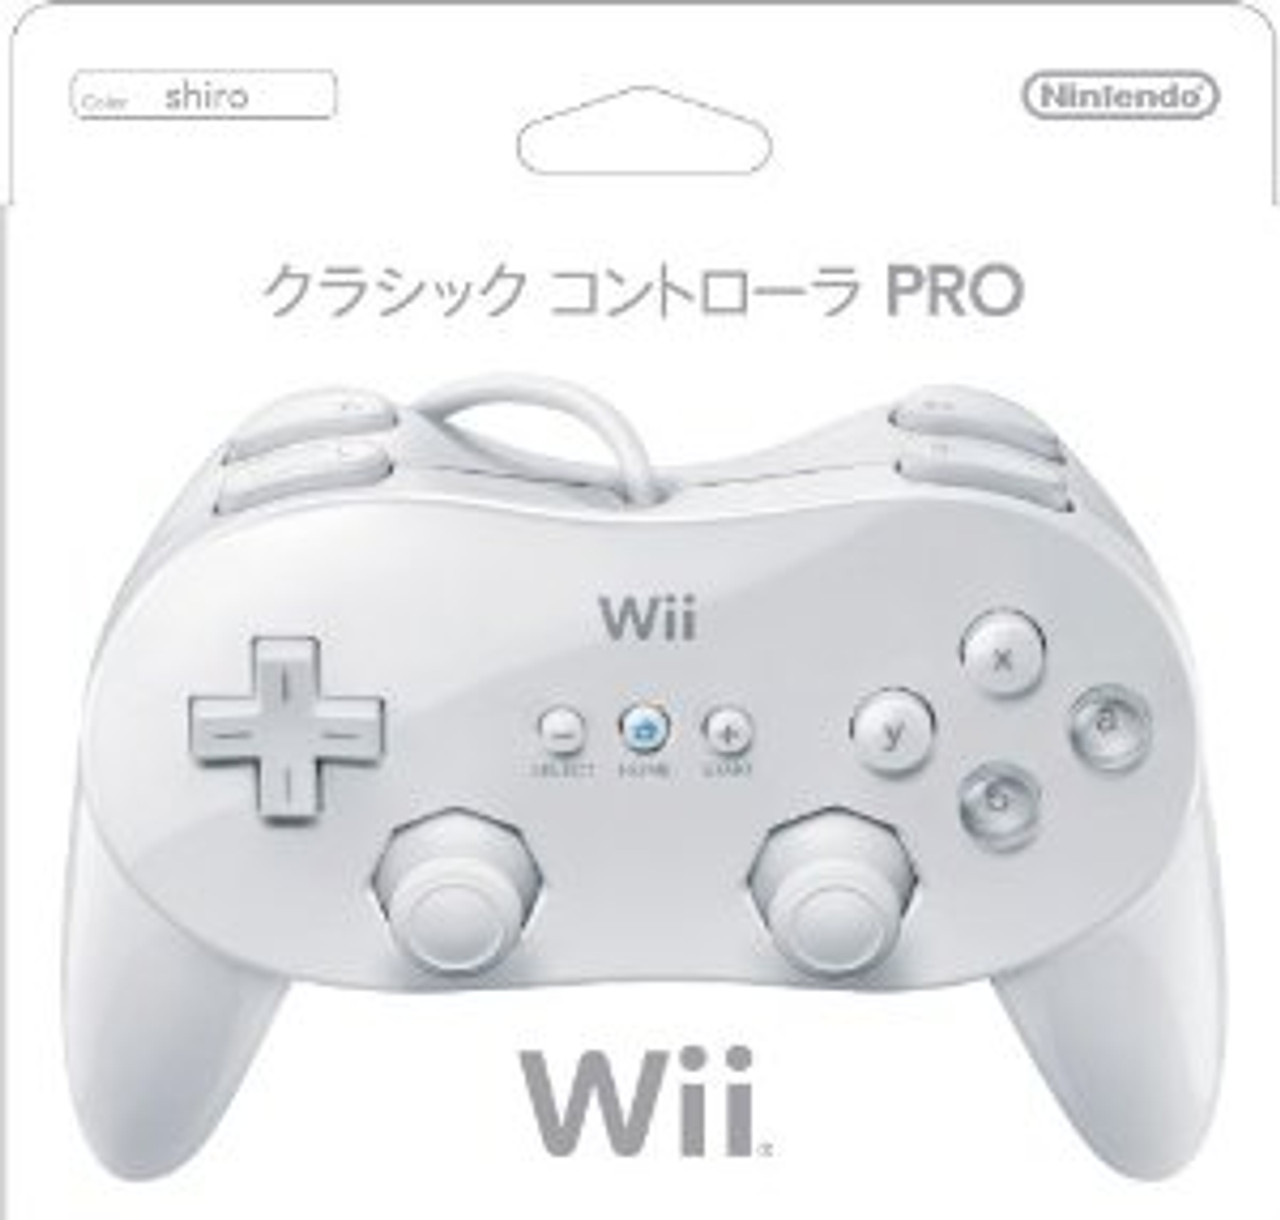  Wii Classic Controller Pro - Black - Nintendo Wii